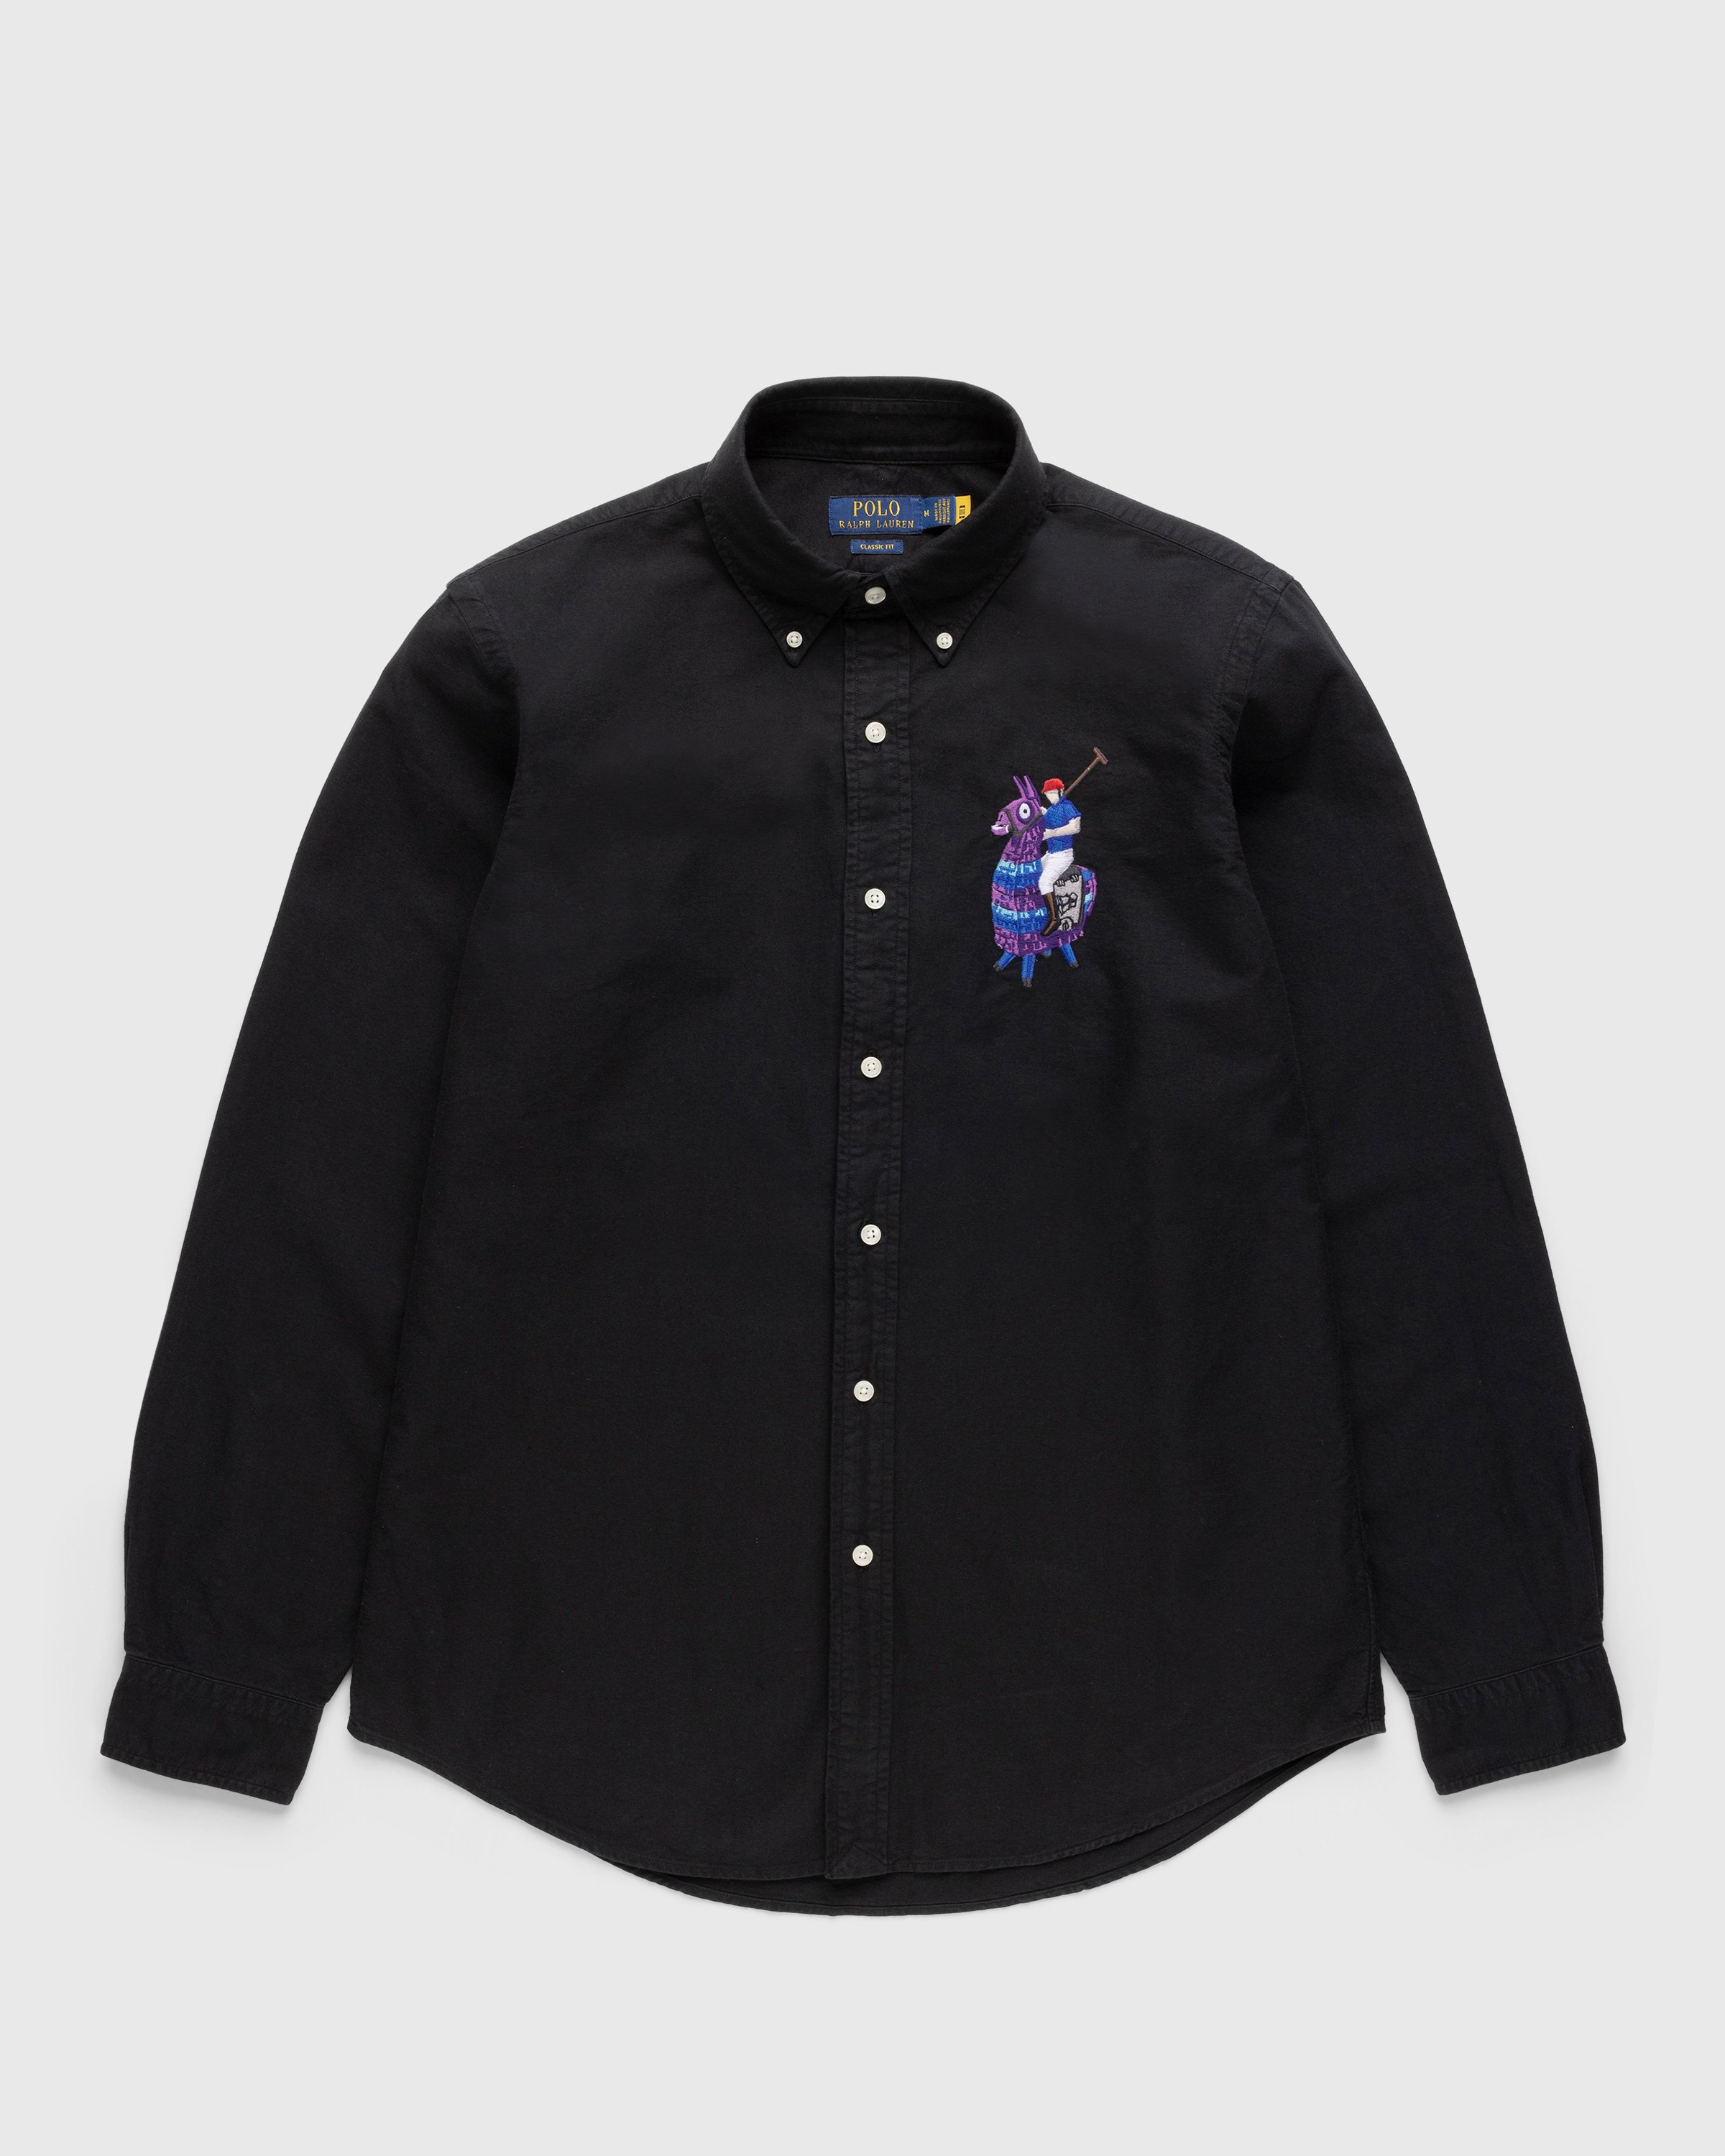 Ralph Lauren x Fortnite - Long Sleeve Sport Shirt Black - Clothing - Black - Image 1